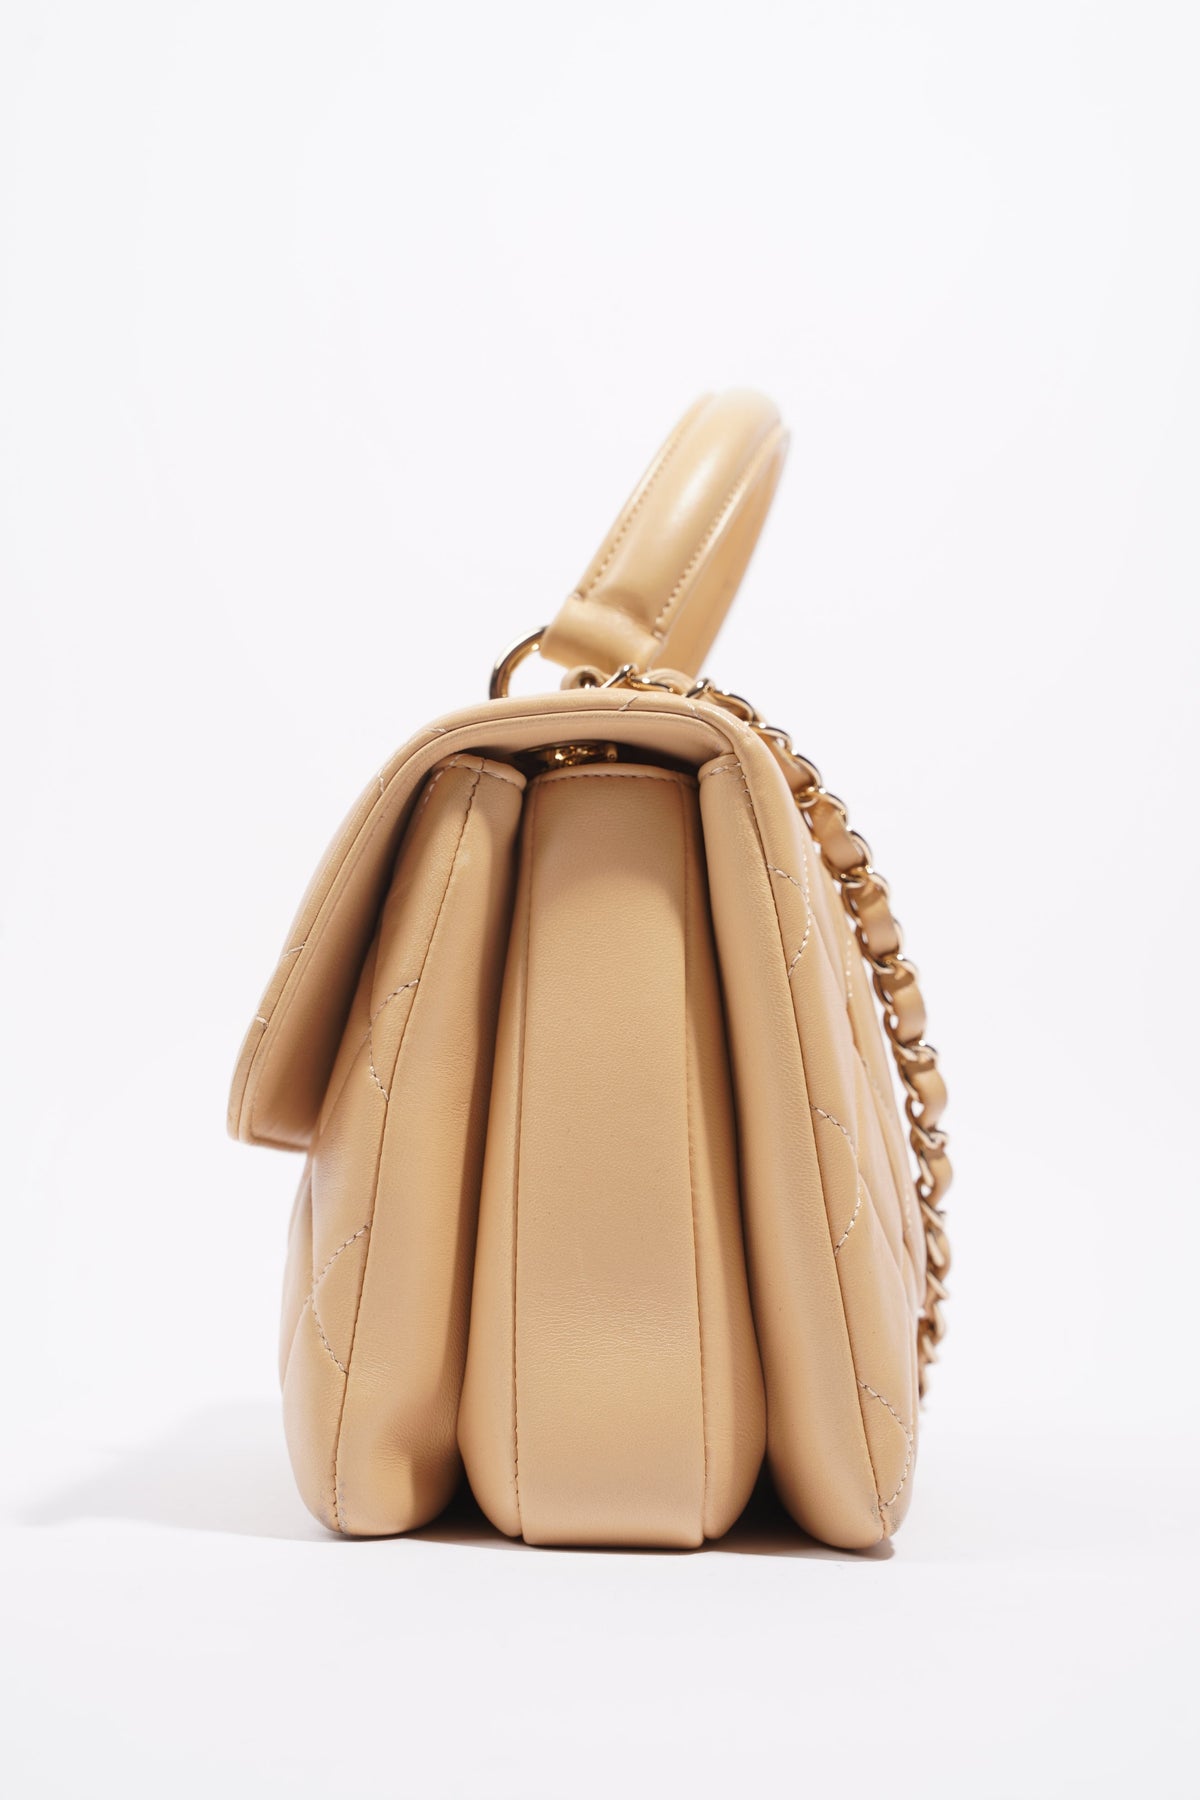 Chanel - Chevron Square bag mini Evening bag